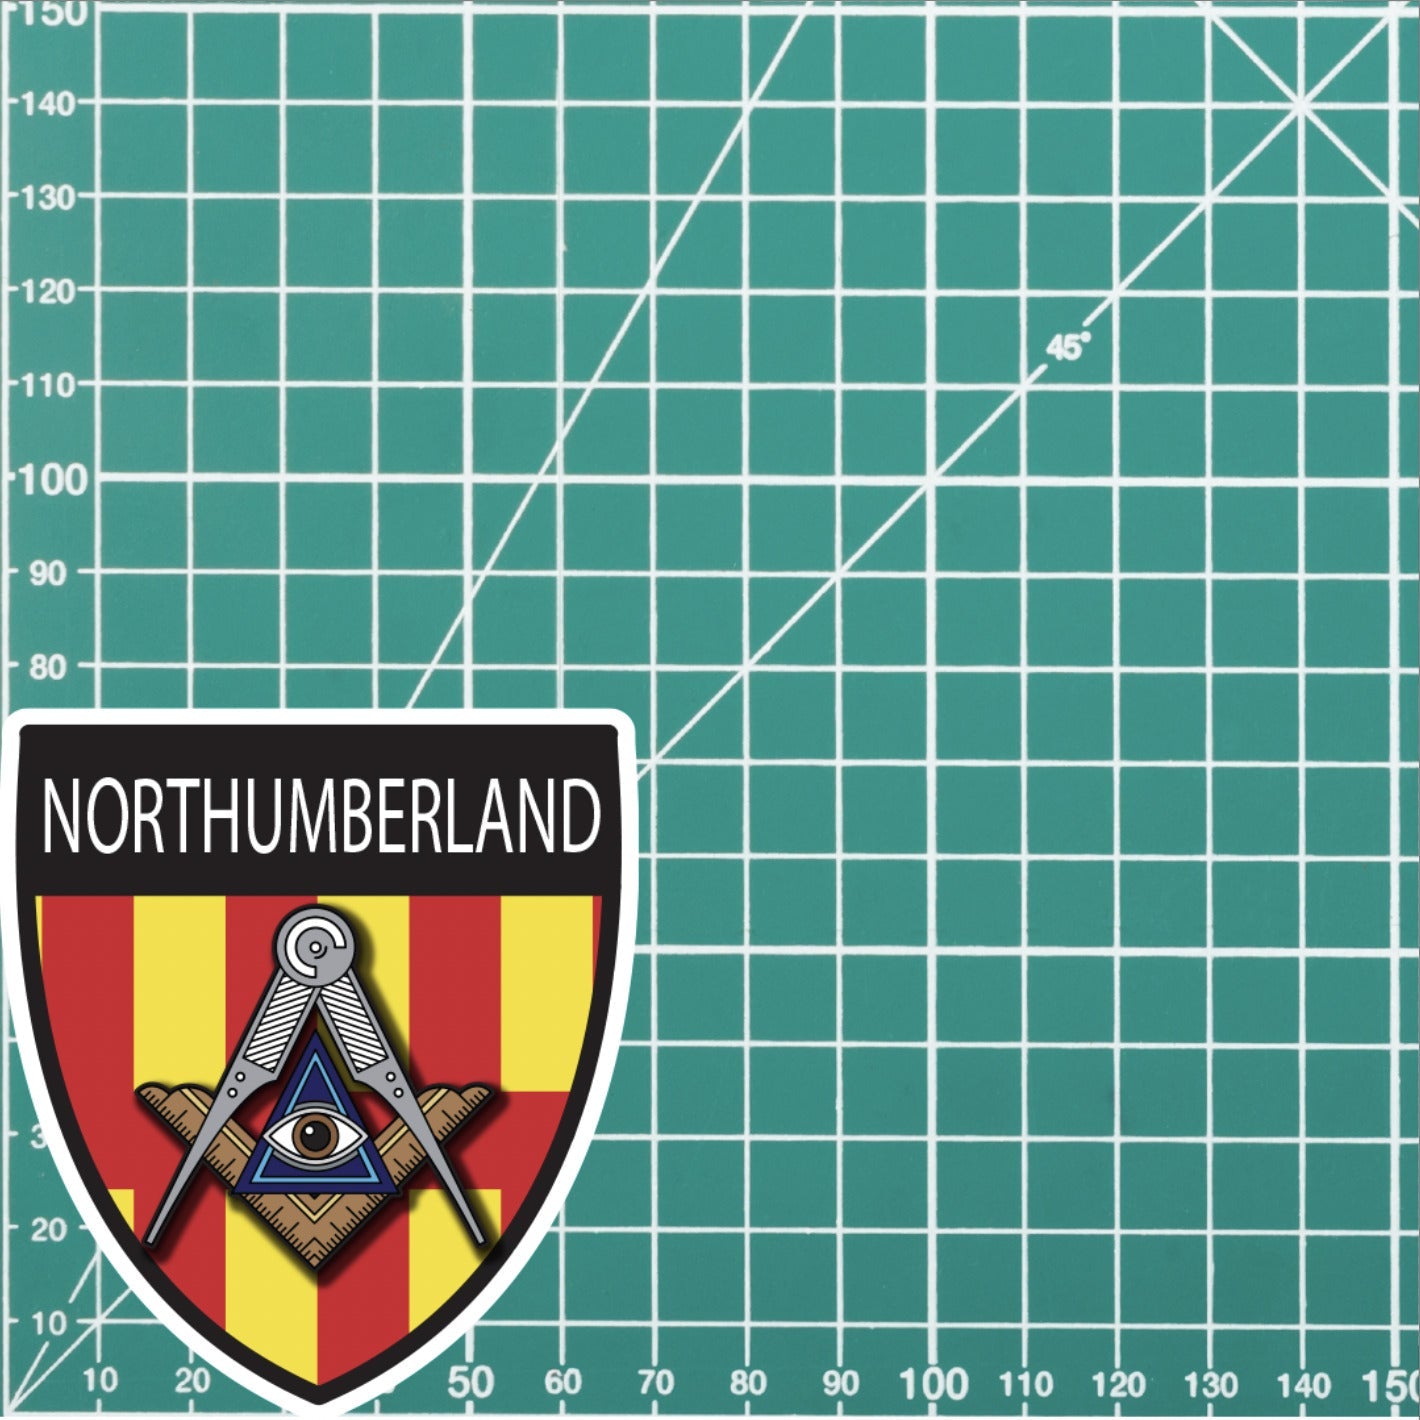 Northumberland Masonic Shield Sticker redplume